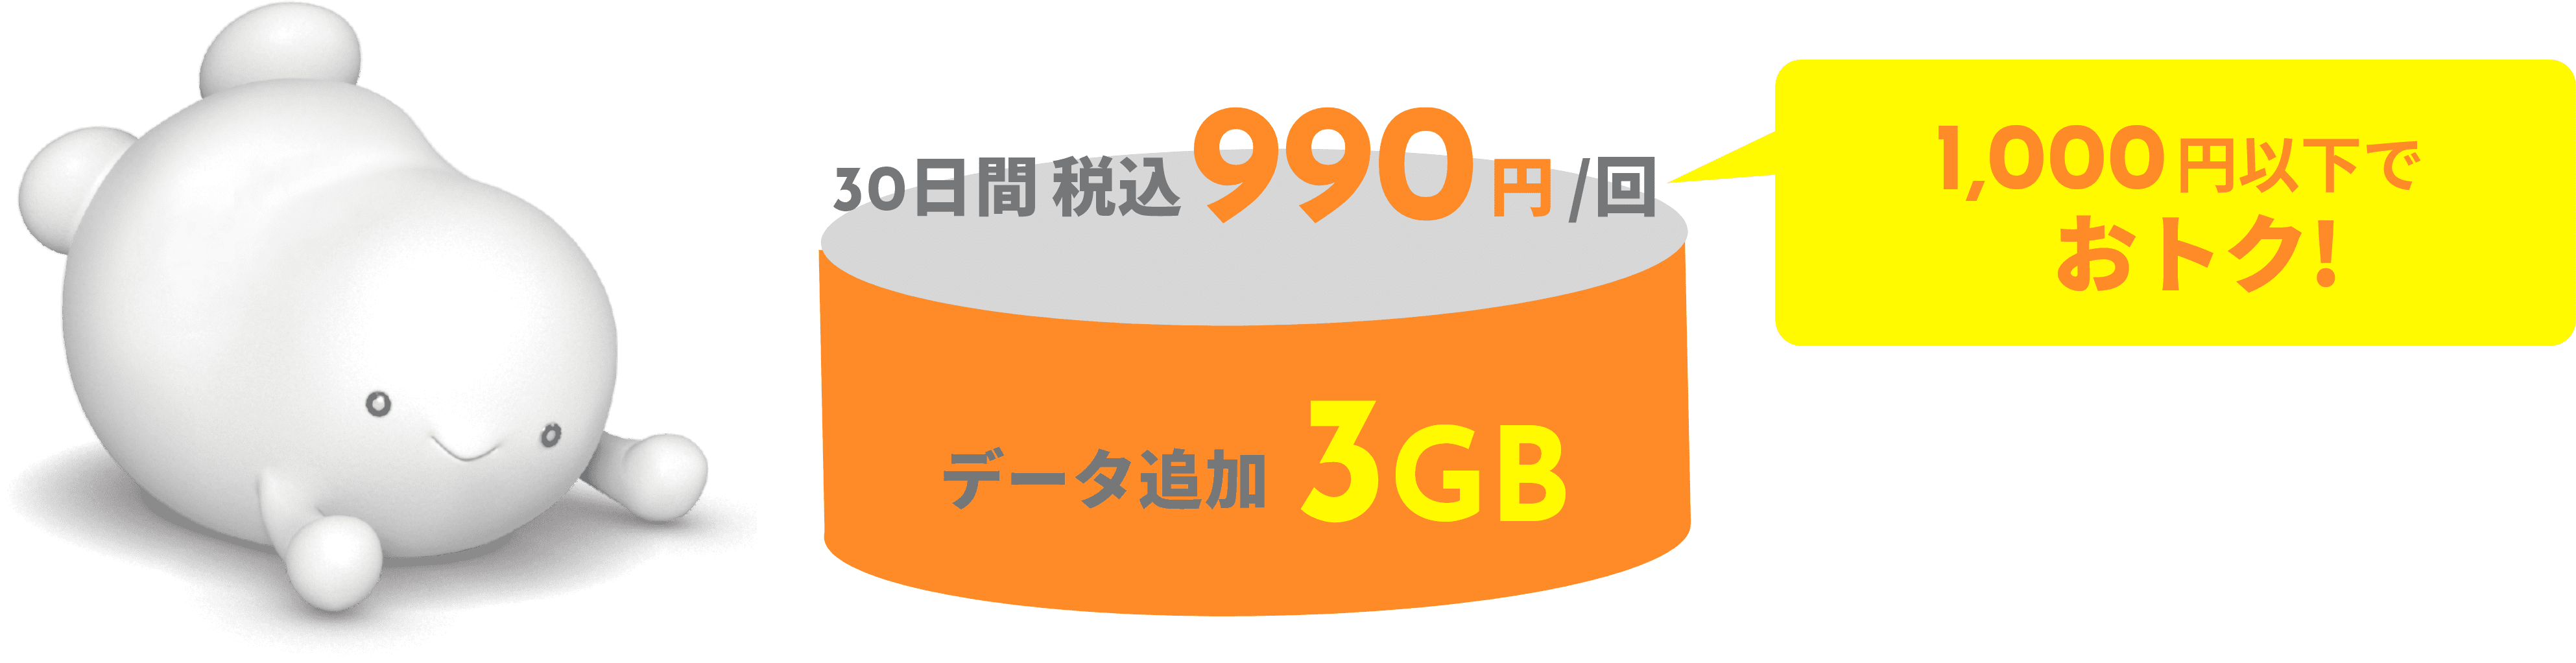 3GB990円/30日間 1,000円以下でおトク!